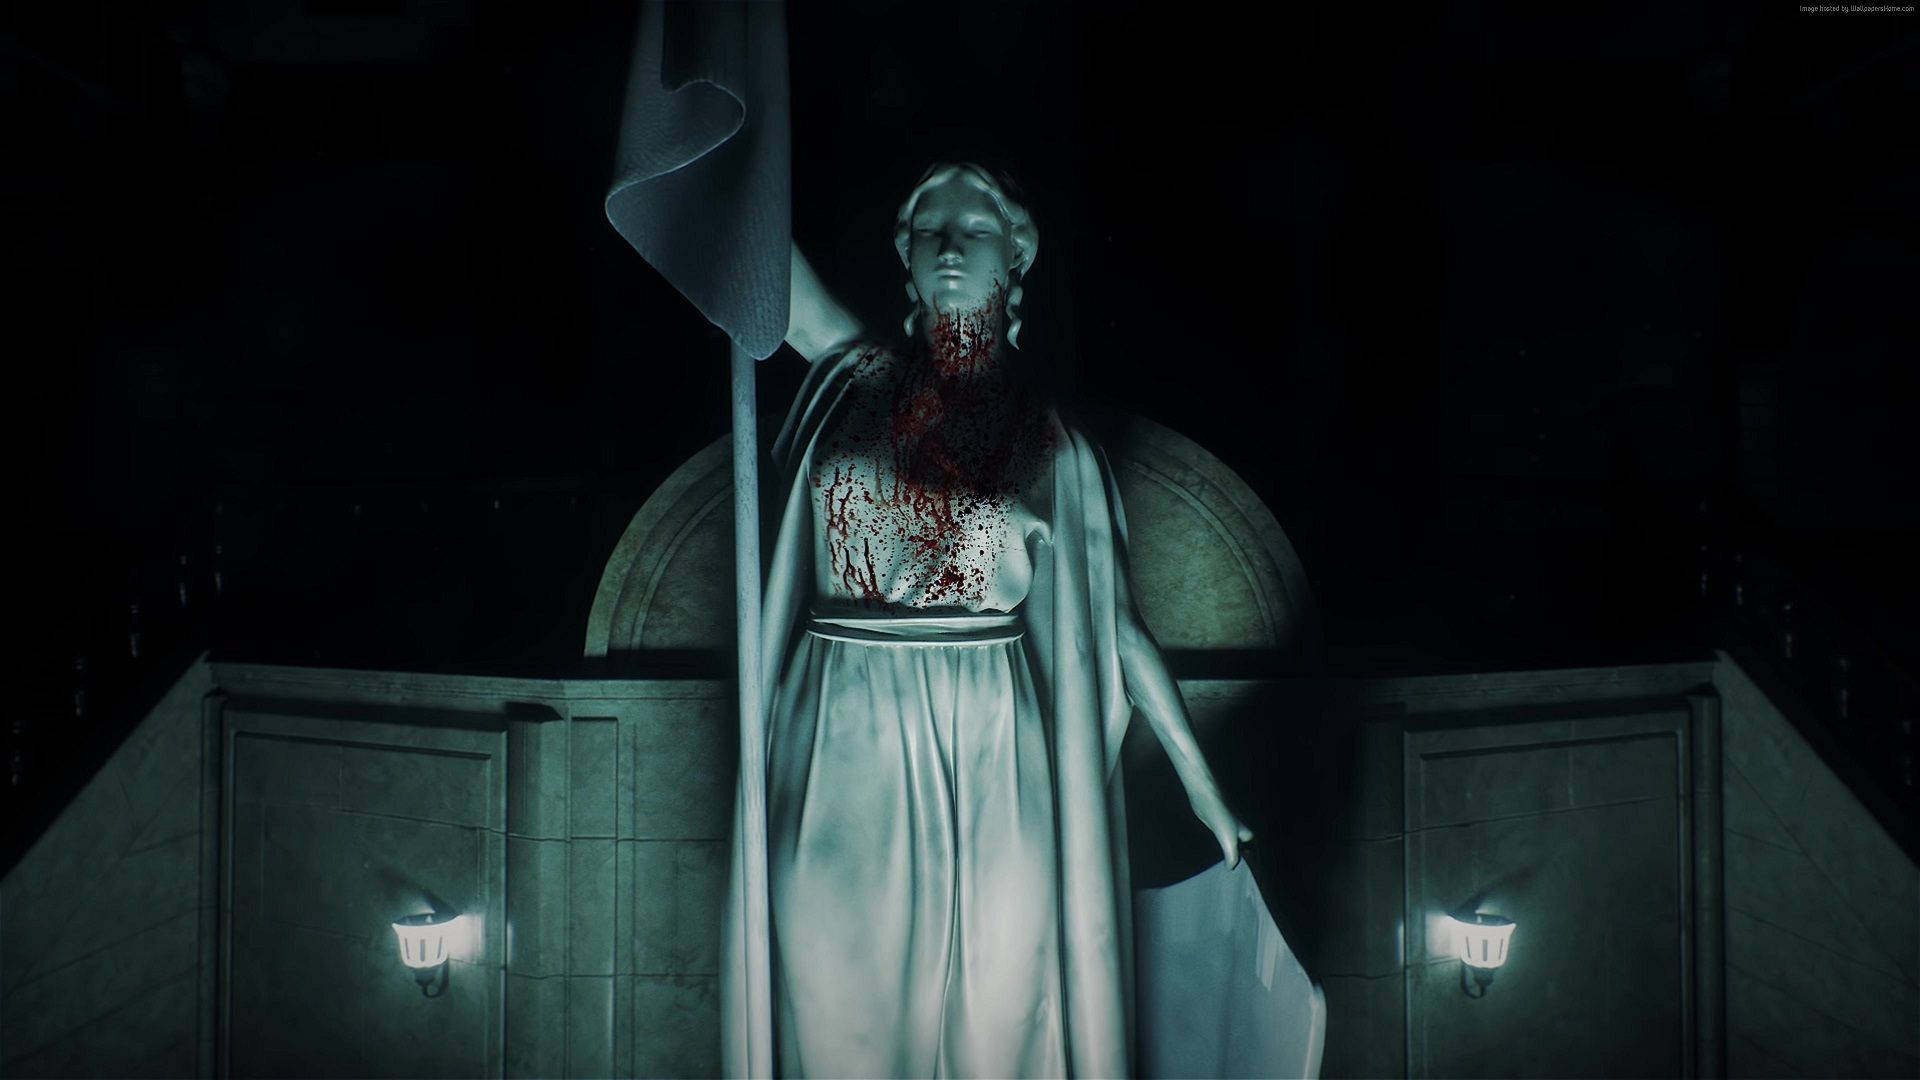 Image  Scary Goddess Statue from Resident Evil 2 Remake Wallpaper